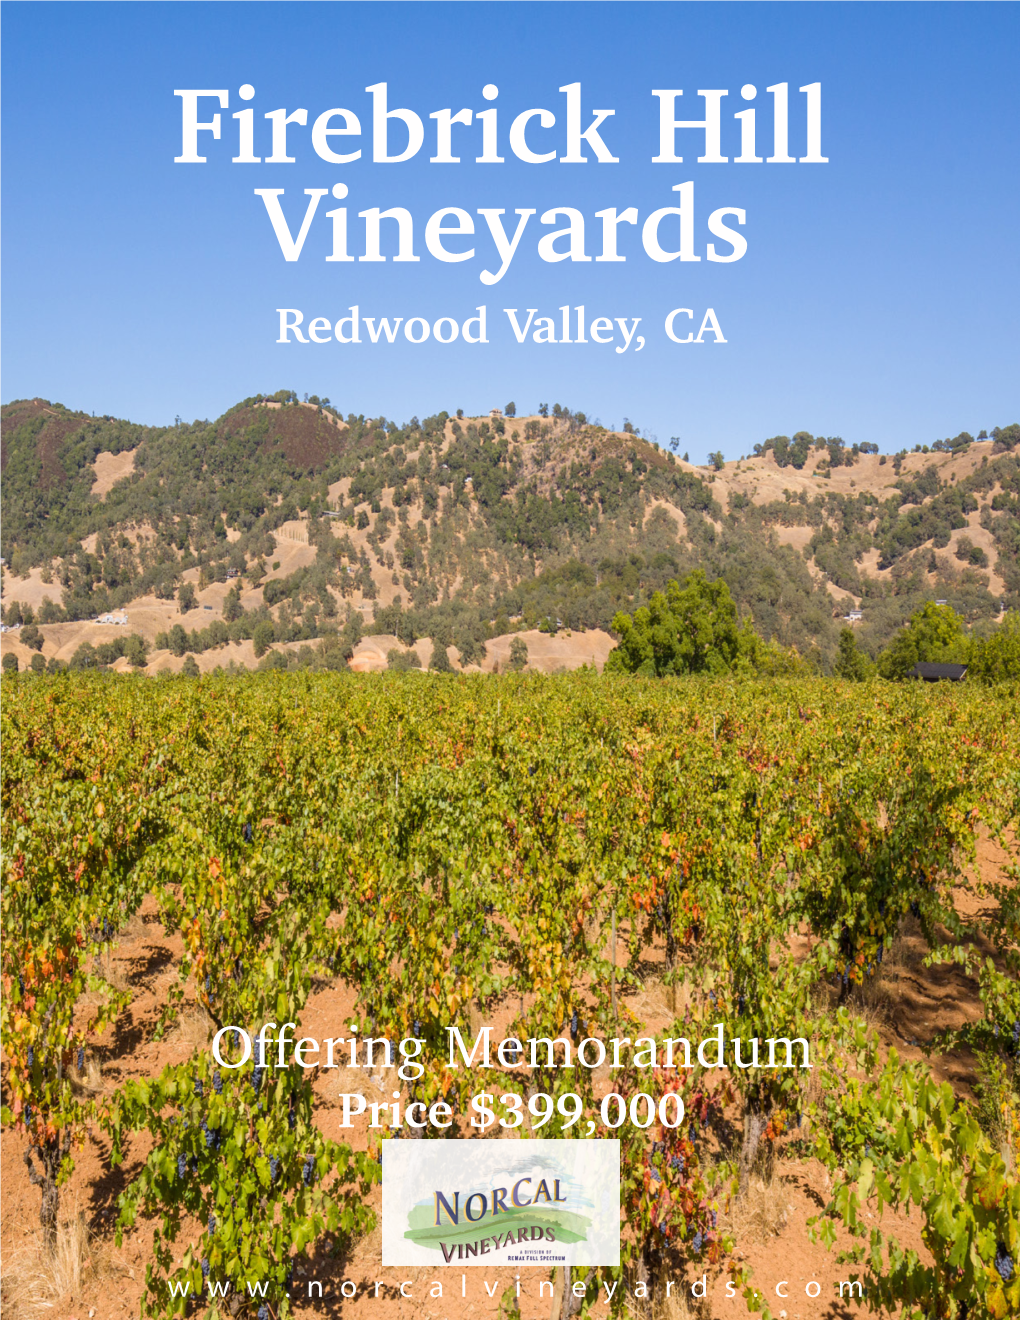 Firebrick Hill Vineyards Redwood Valley, CA